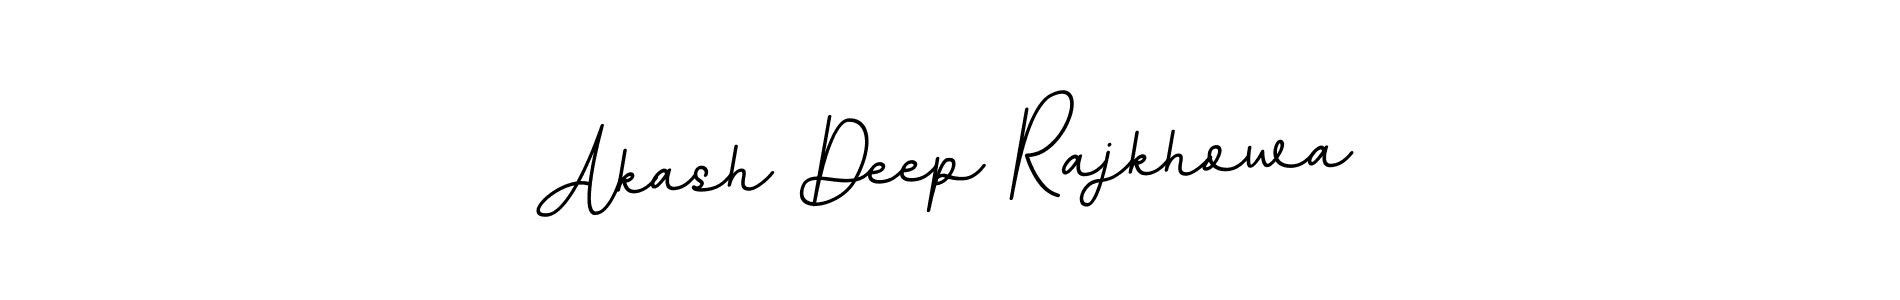 How to Draw Akash Deep Rajkhowa signature style? BallpointsItalic-DORy9 is a latest design signature styles for name Akash Deep Rajkhowa. Akash Deep Rajkhowa signature style 11 images and pictures png